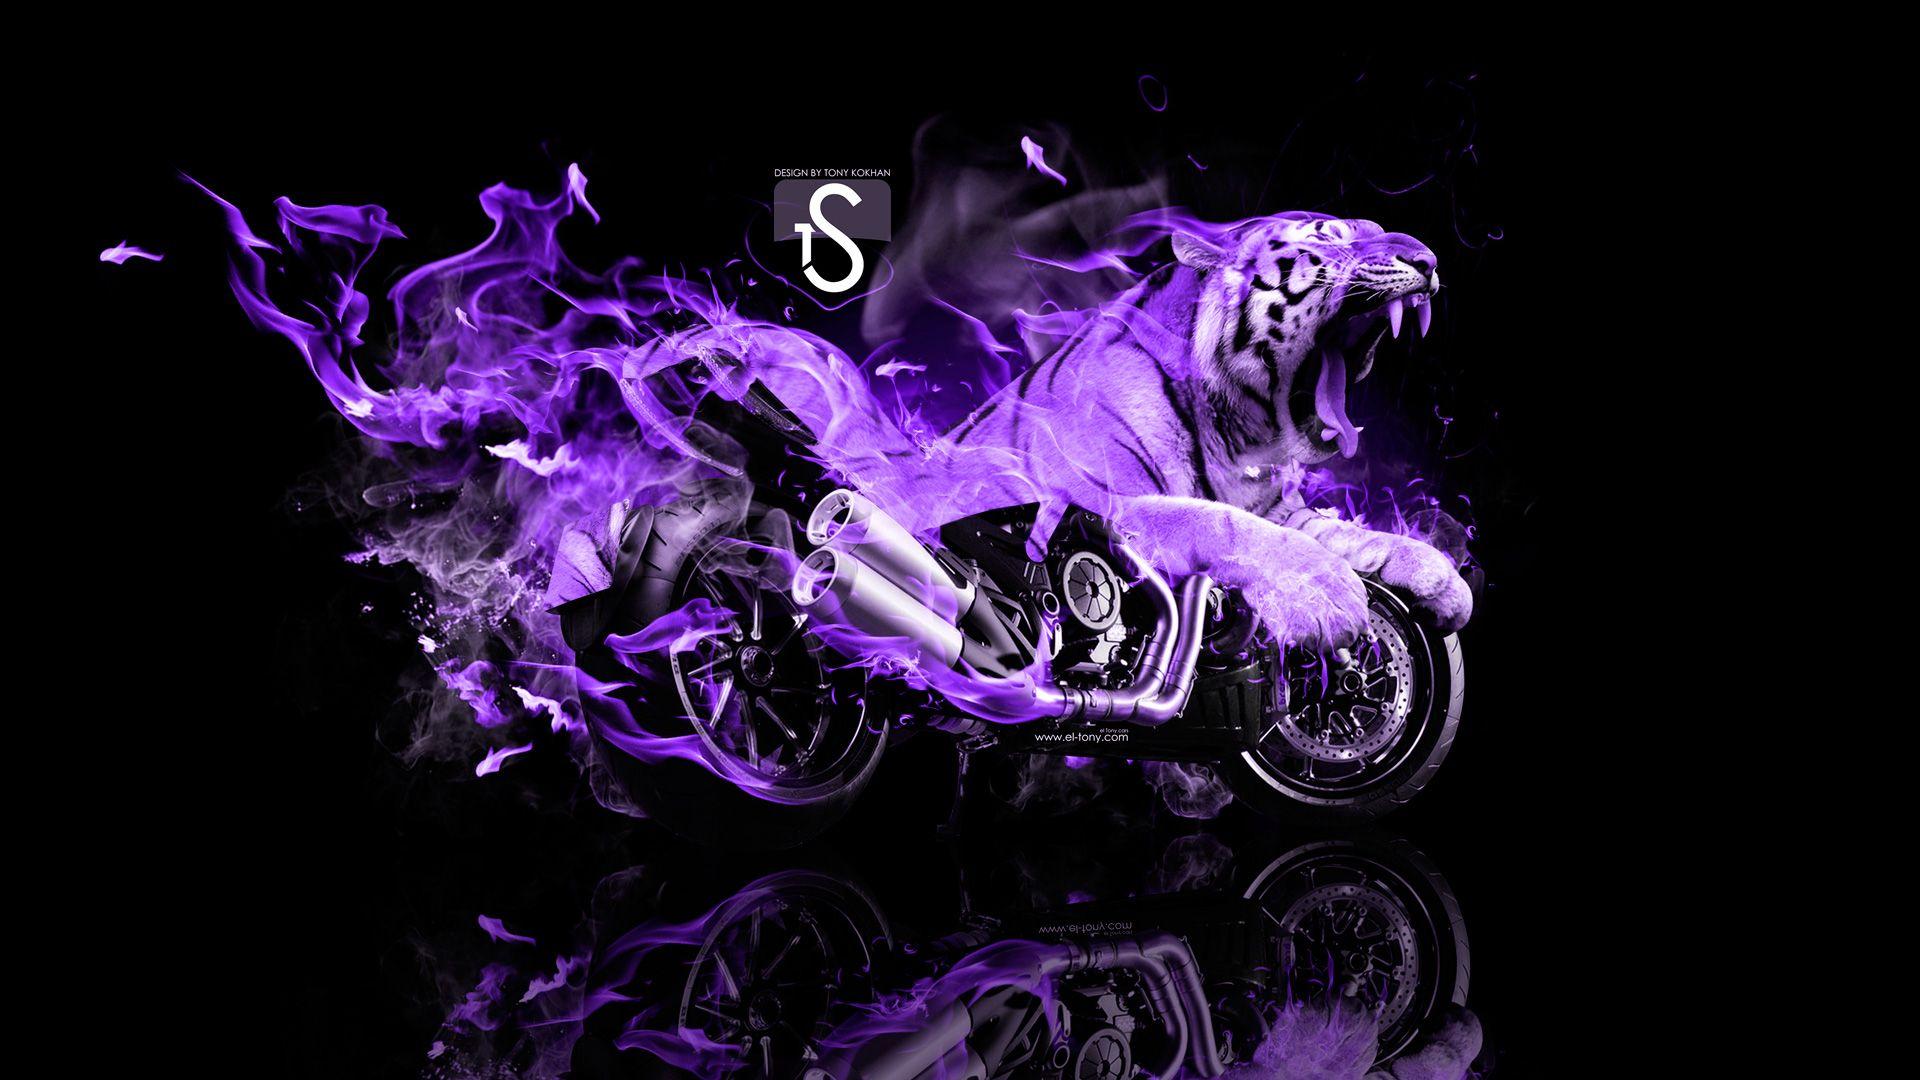 Ducati Diavel Tiger Fire Fantasy 2013